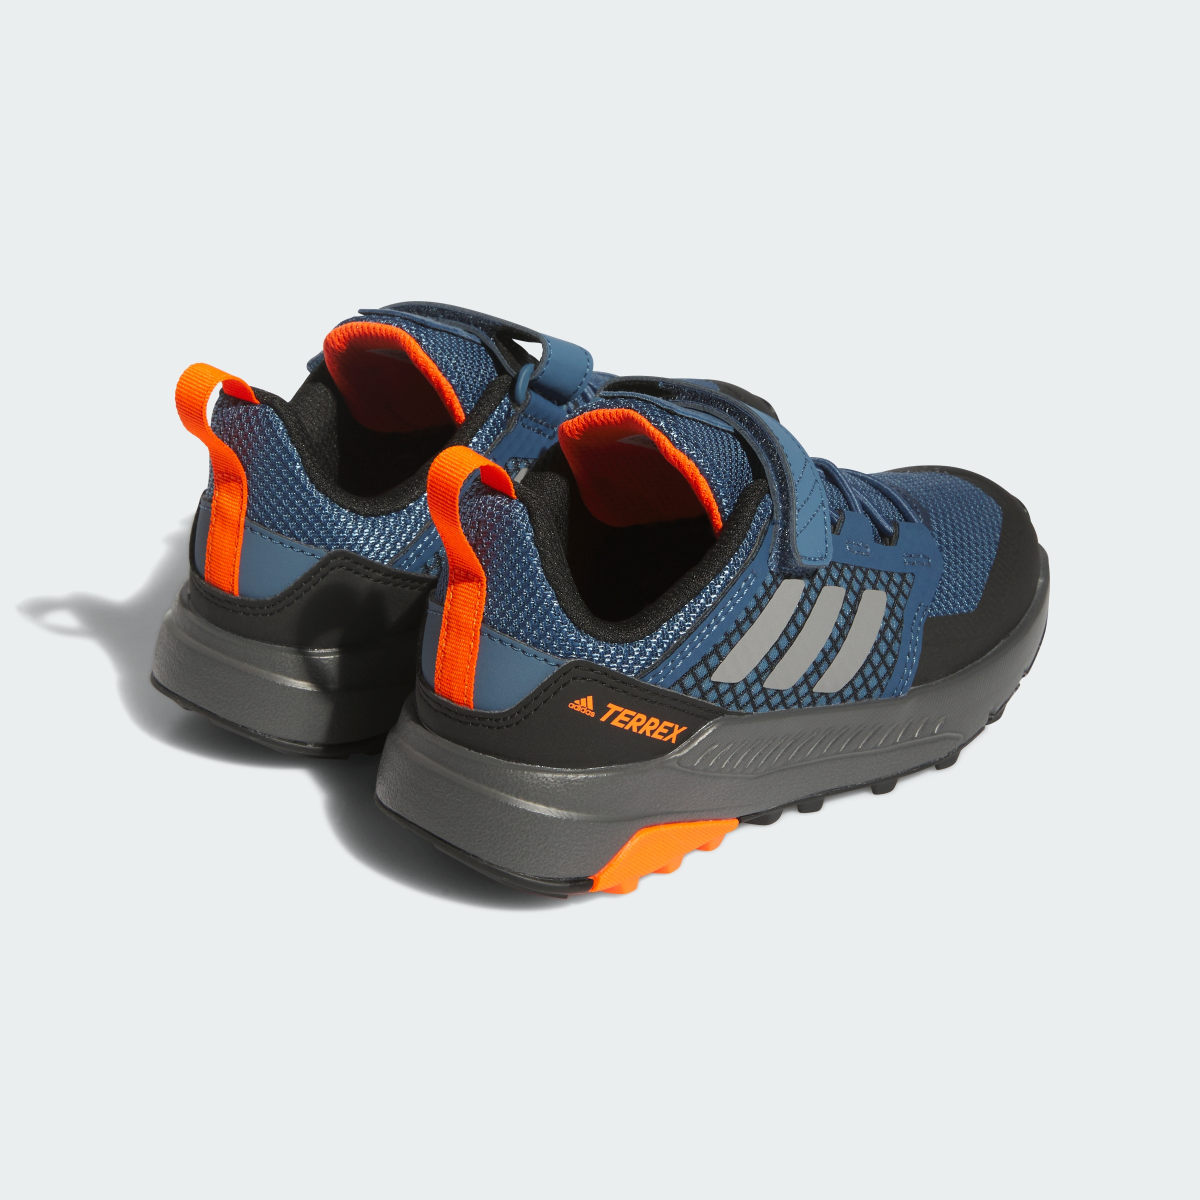 Adidas Terrex Trailmaker Hiking Shoes. 6